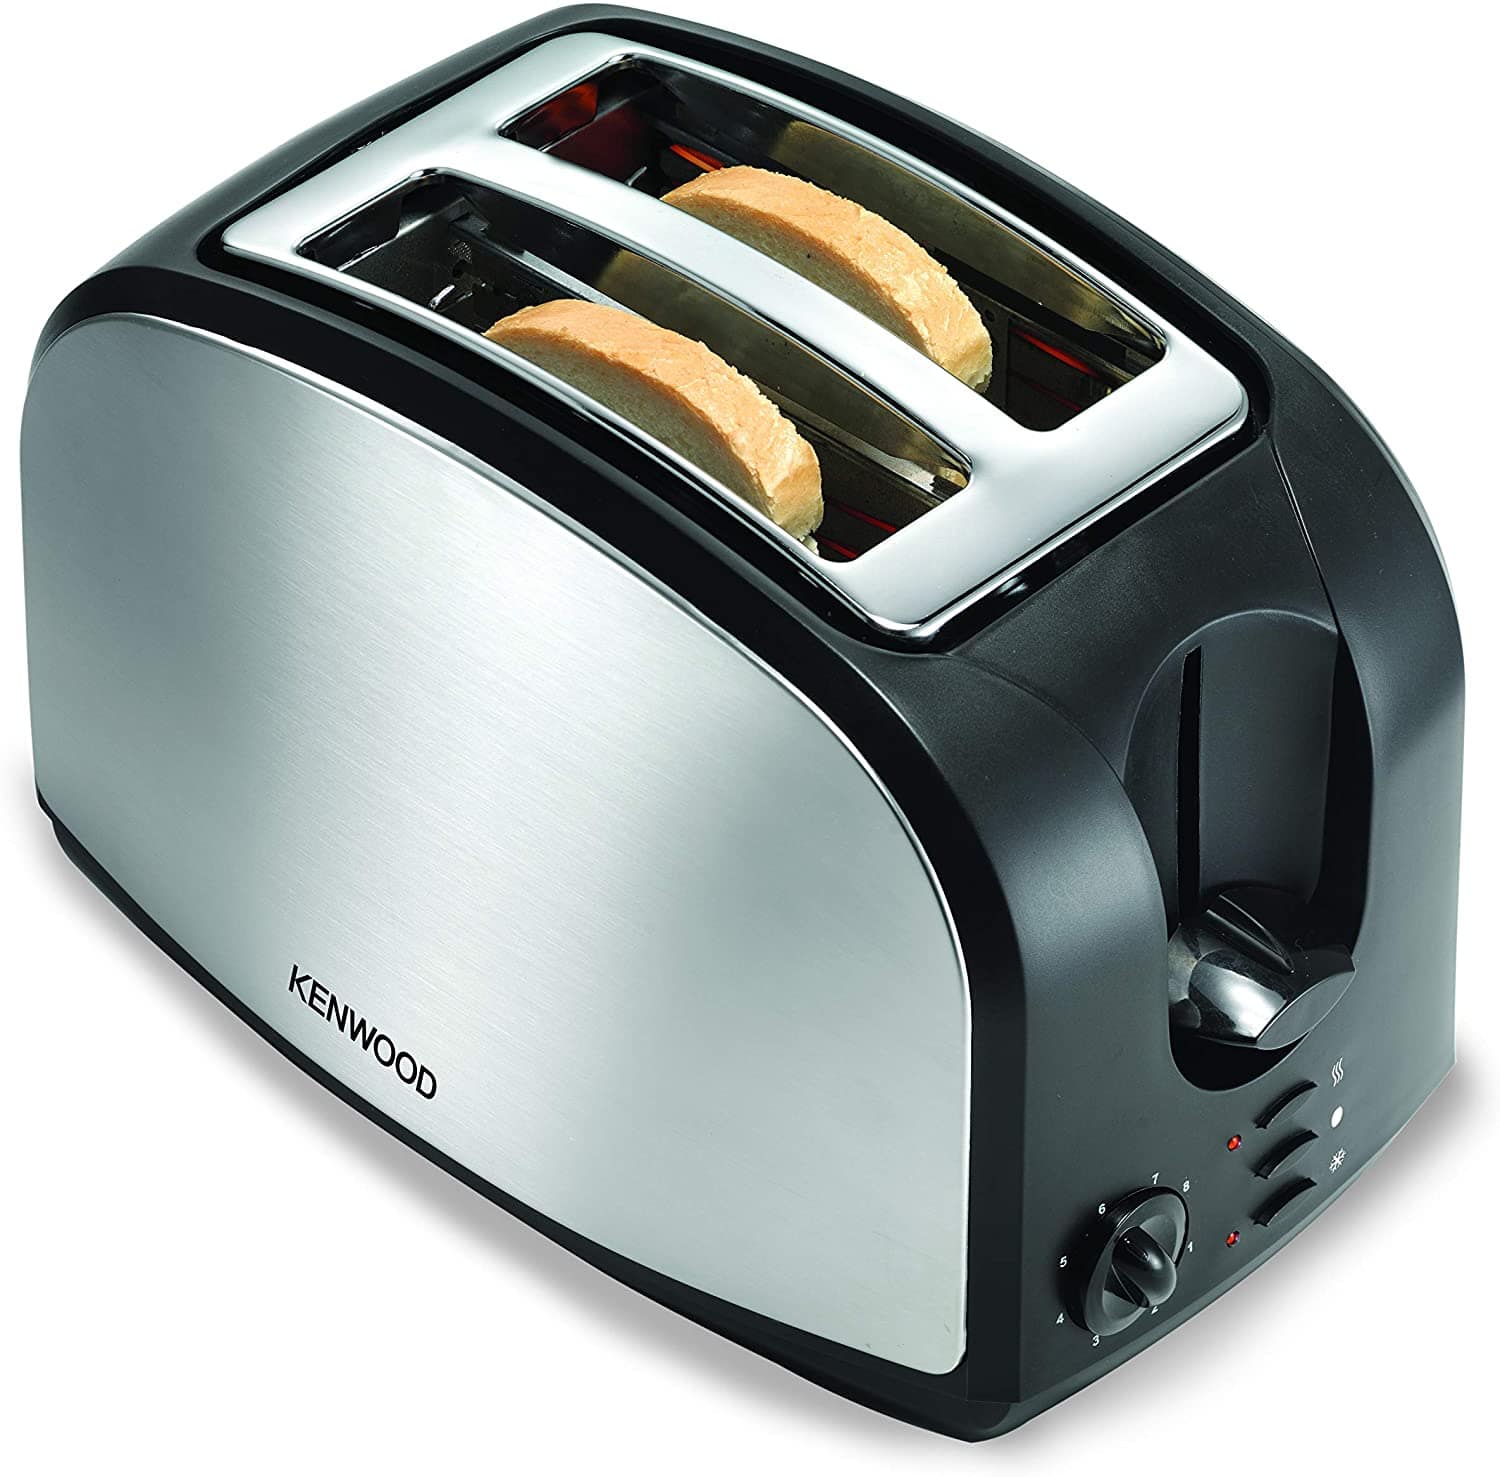 Kenwood 2 Slice Toaster